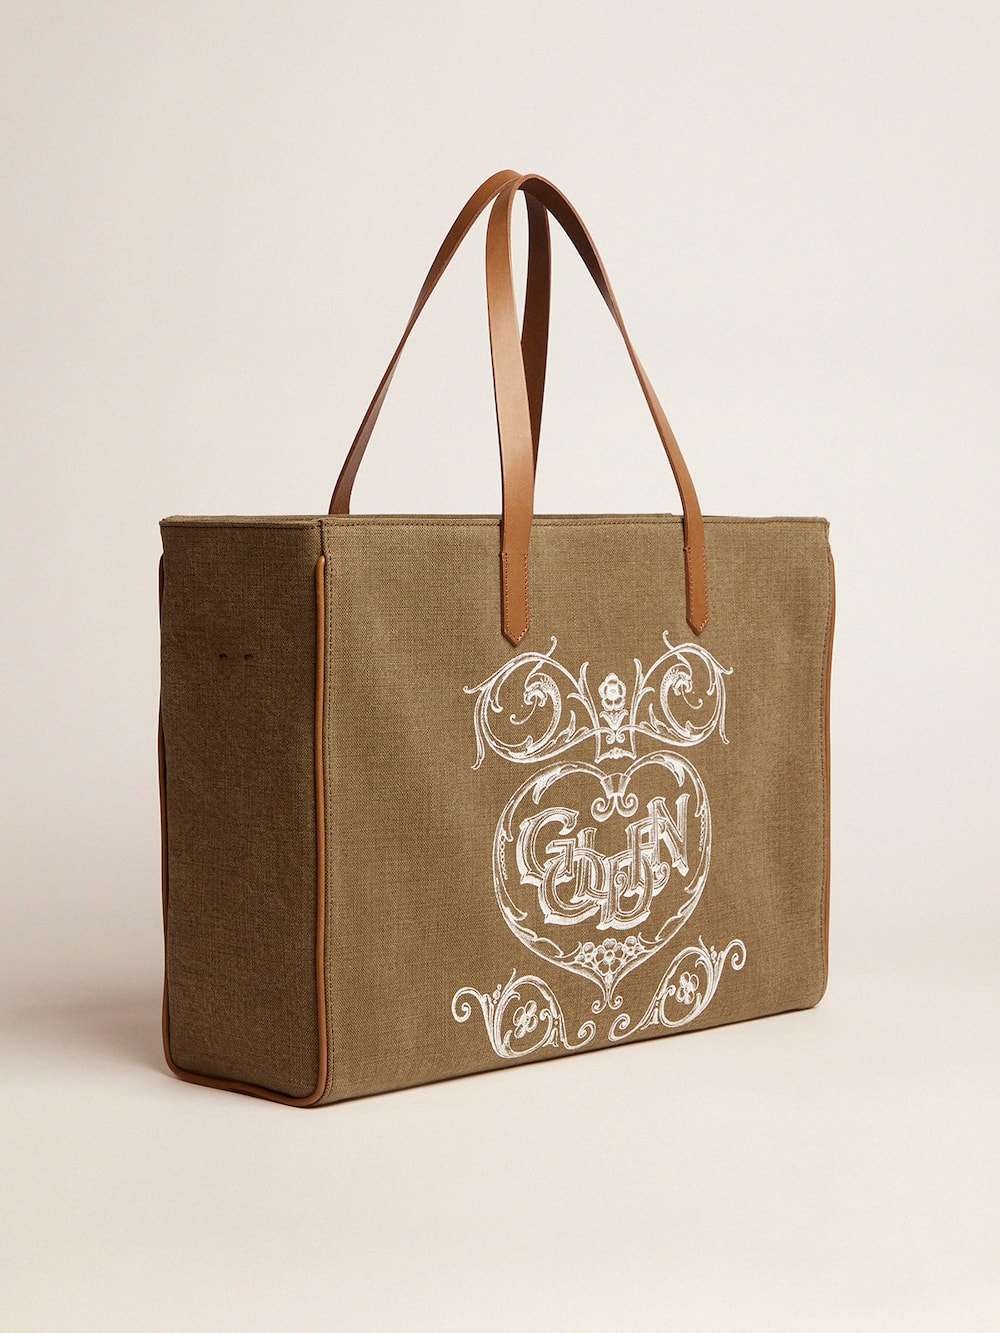 Golden Goose - Bolso California Bag de tela verde militar East-West con estampado serigrafiado in 